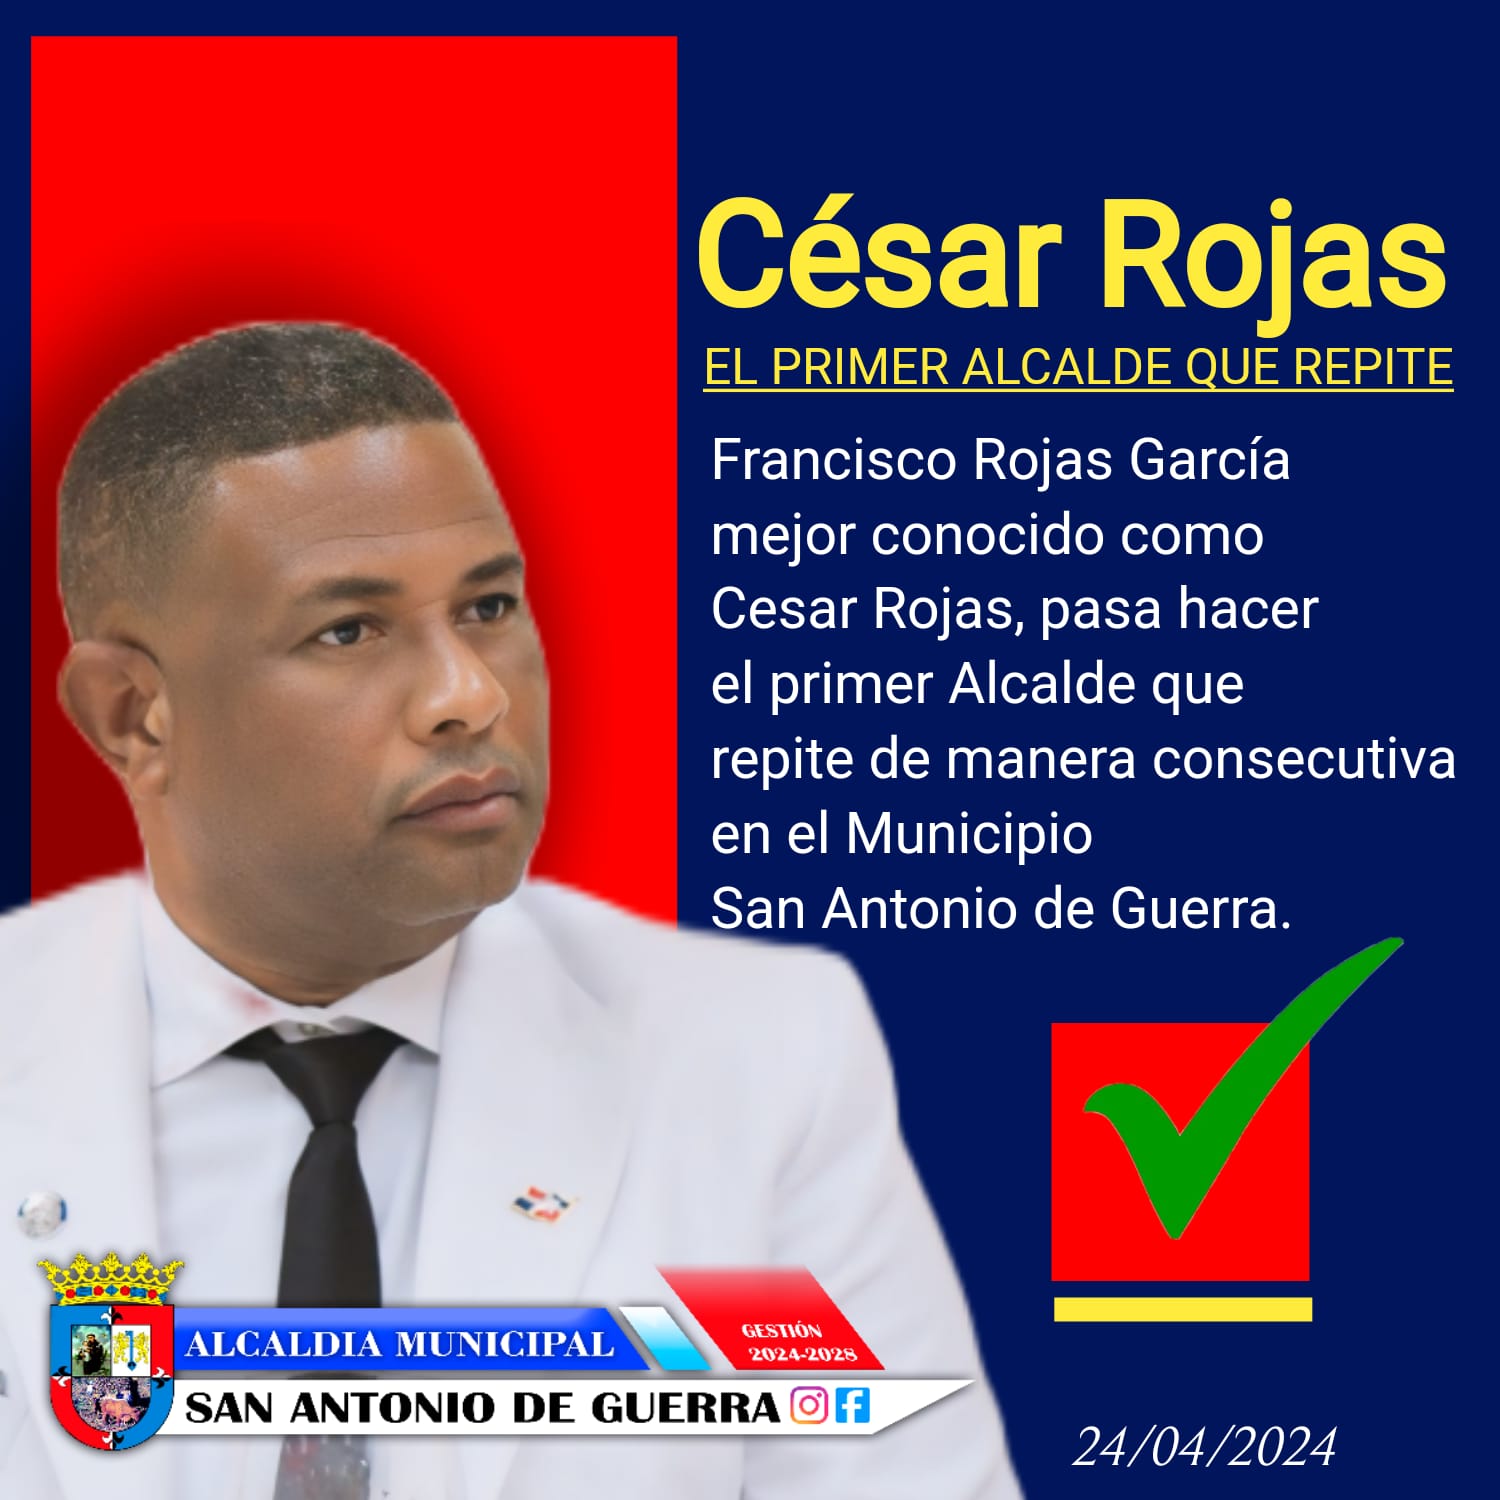 Cesar Rojas el primer Alcalde que Repite